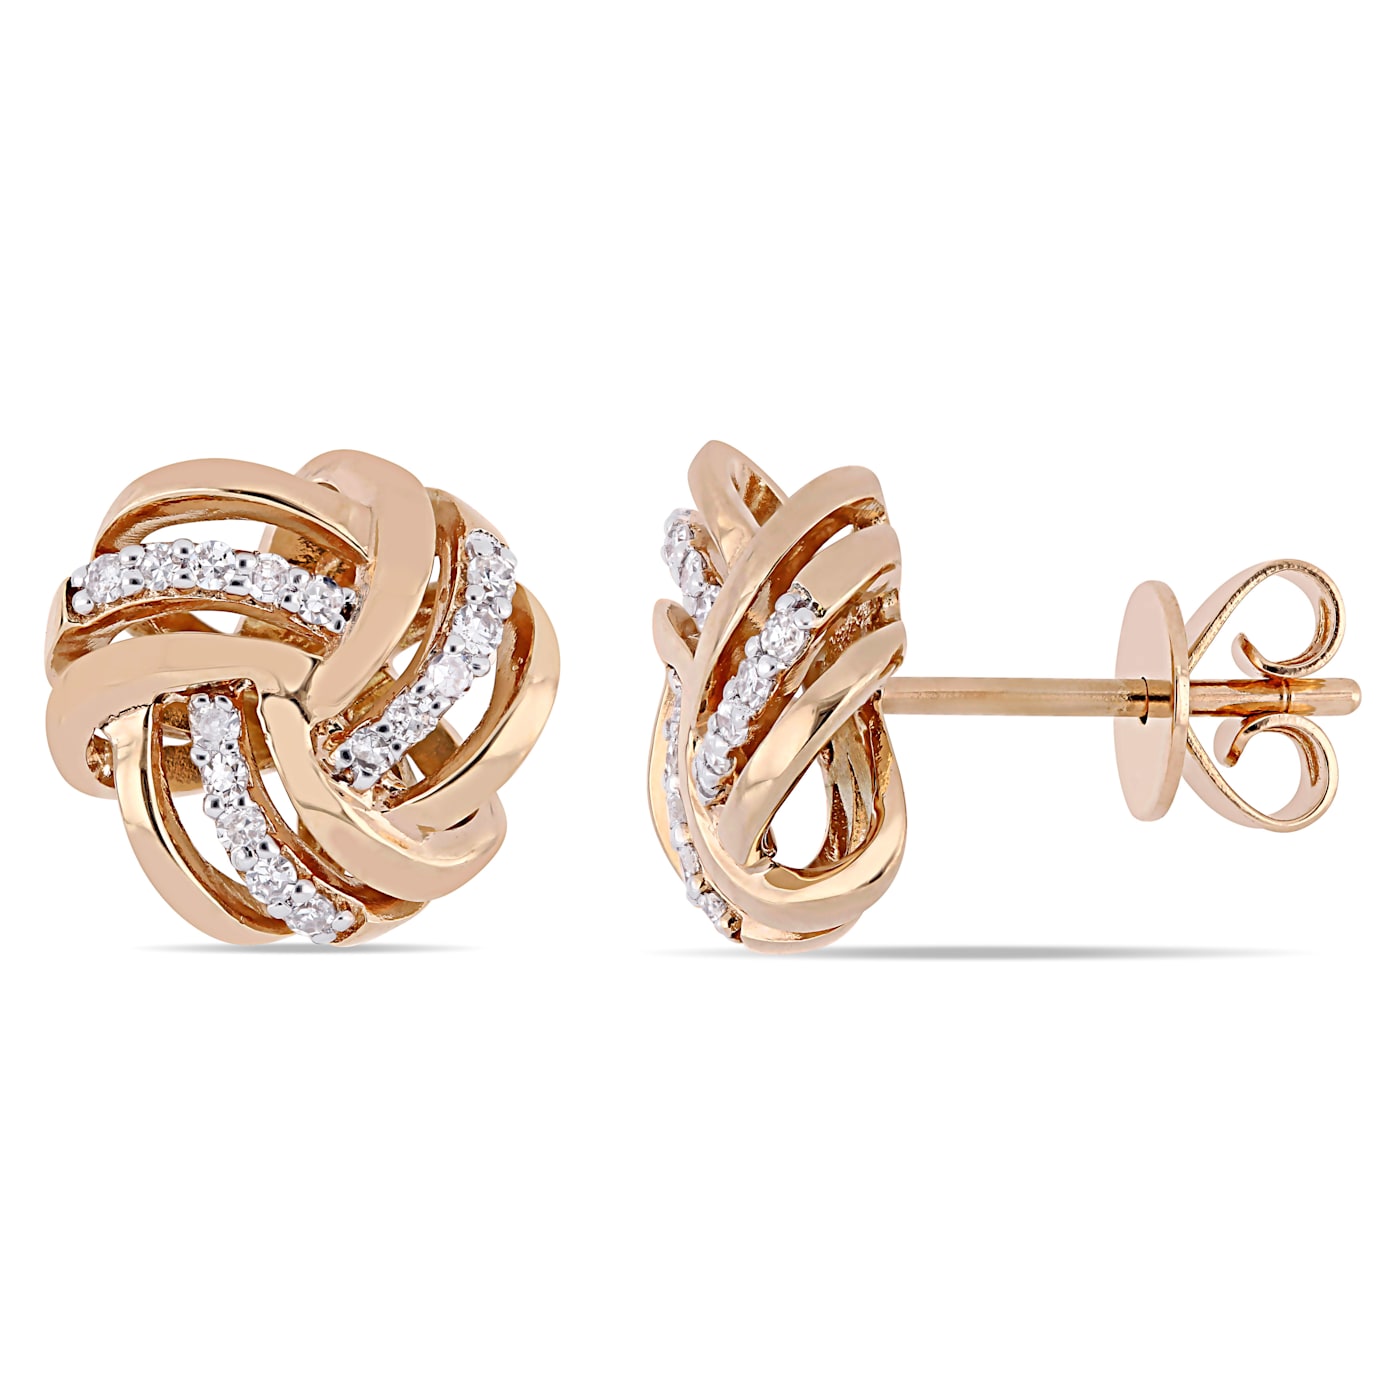 1/6 CT TW Diamond Knot Stud Earrings in 14k Rose Gold - 15481A